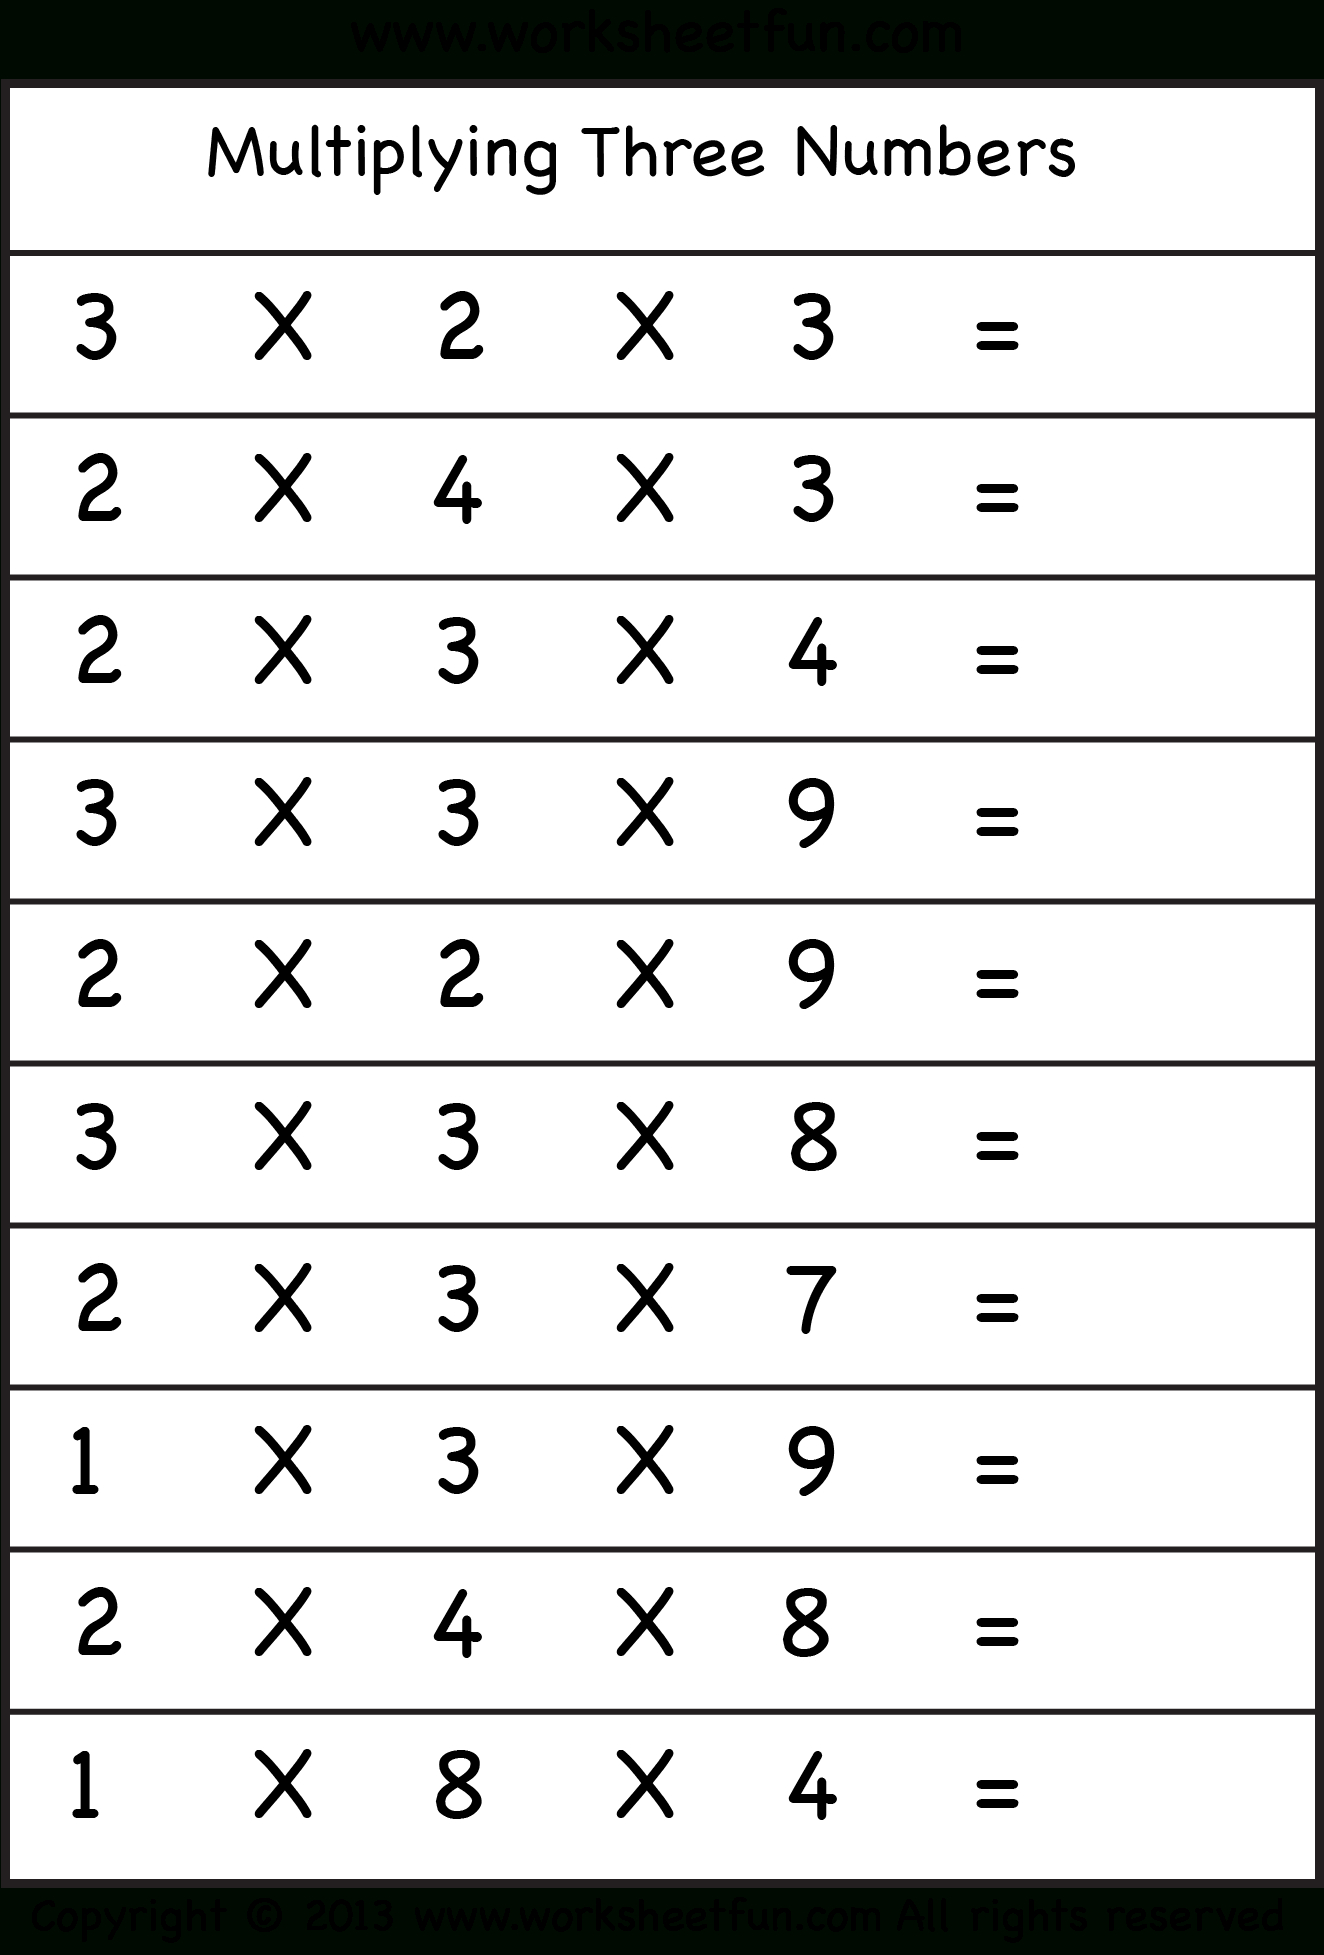 multiplication-worksheets-for-grade-3-pdf-the-multiplication-table-multiplication-worksheets